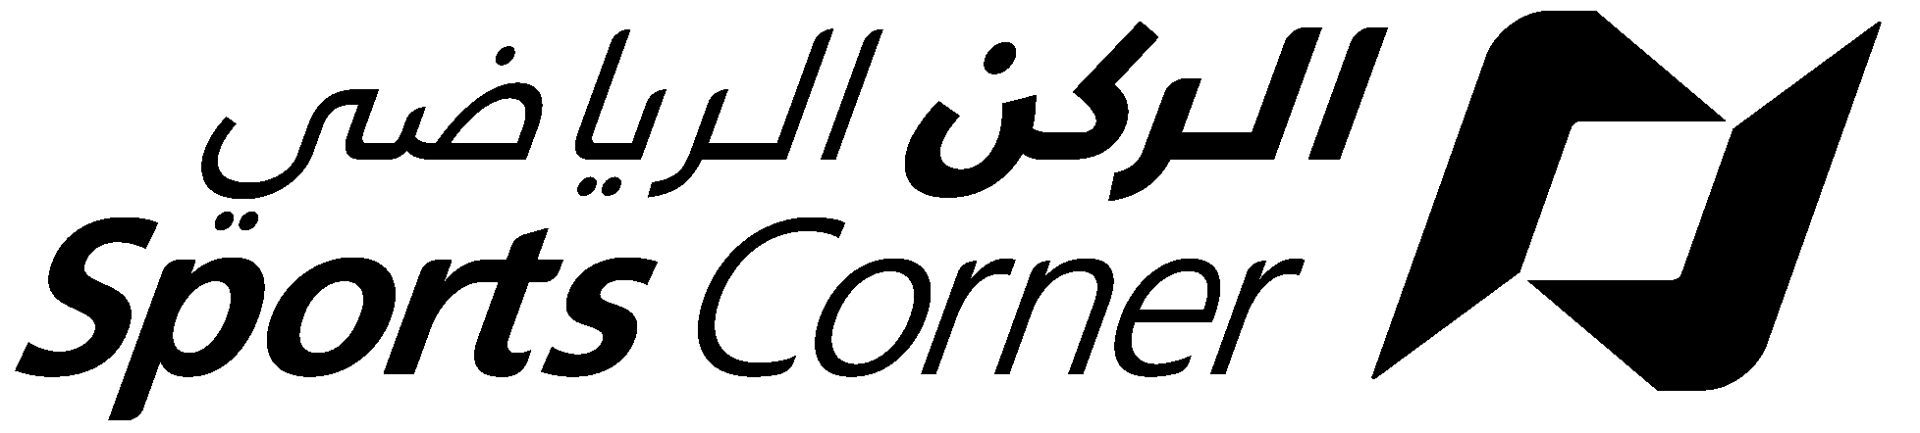 climacool logo vector